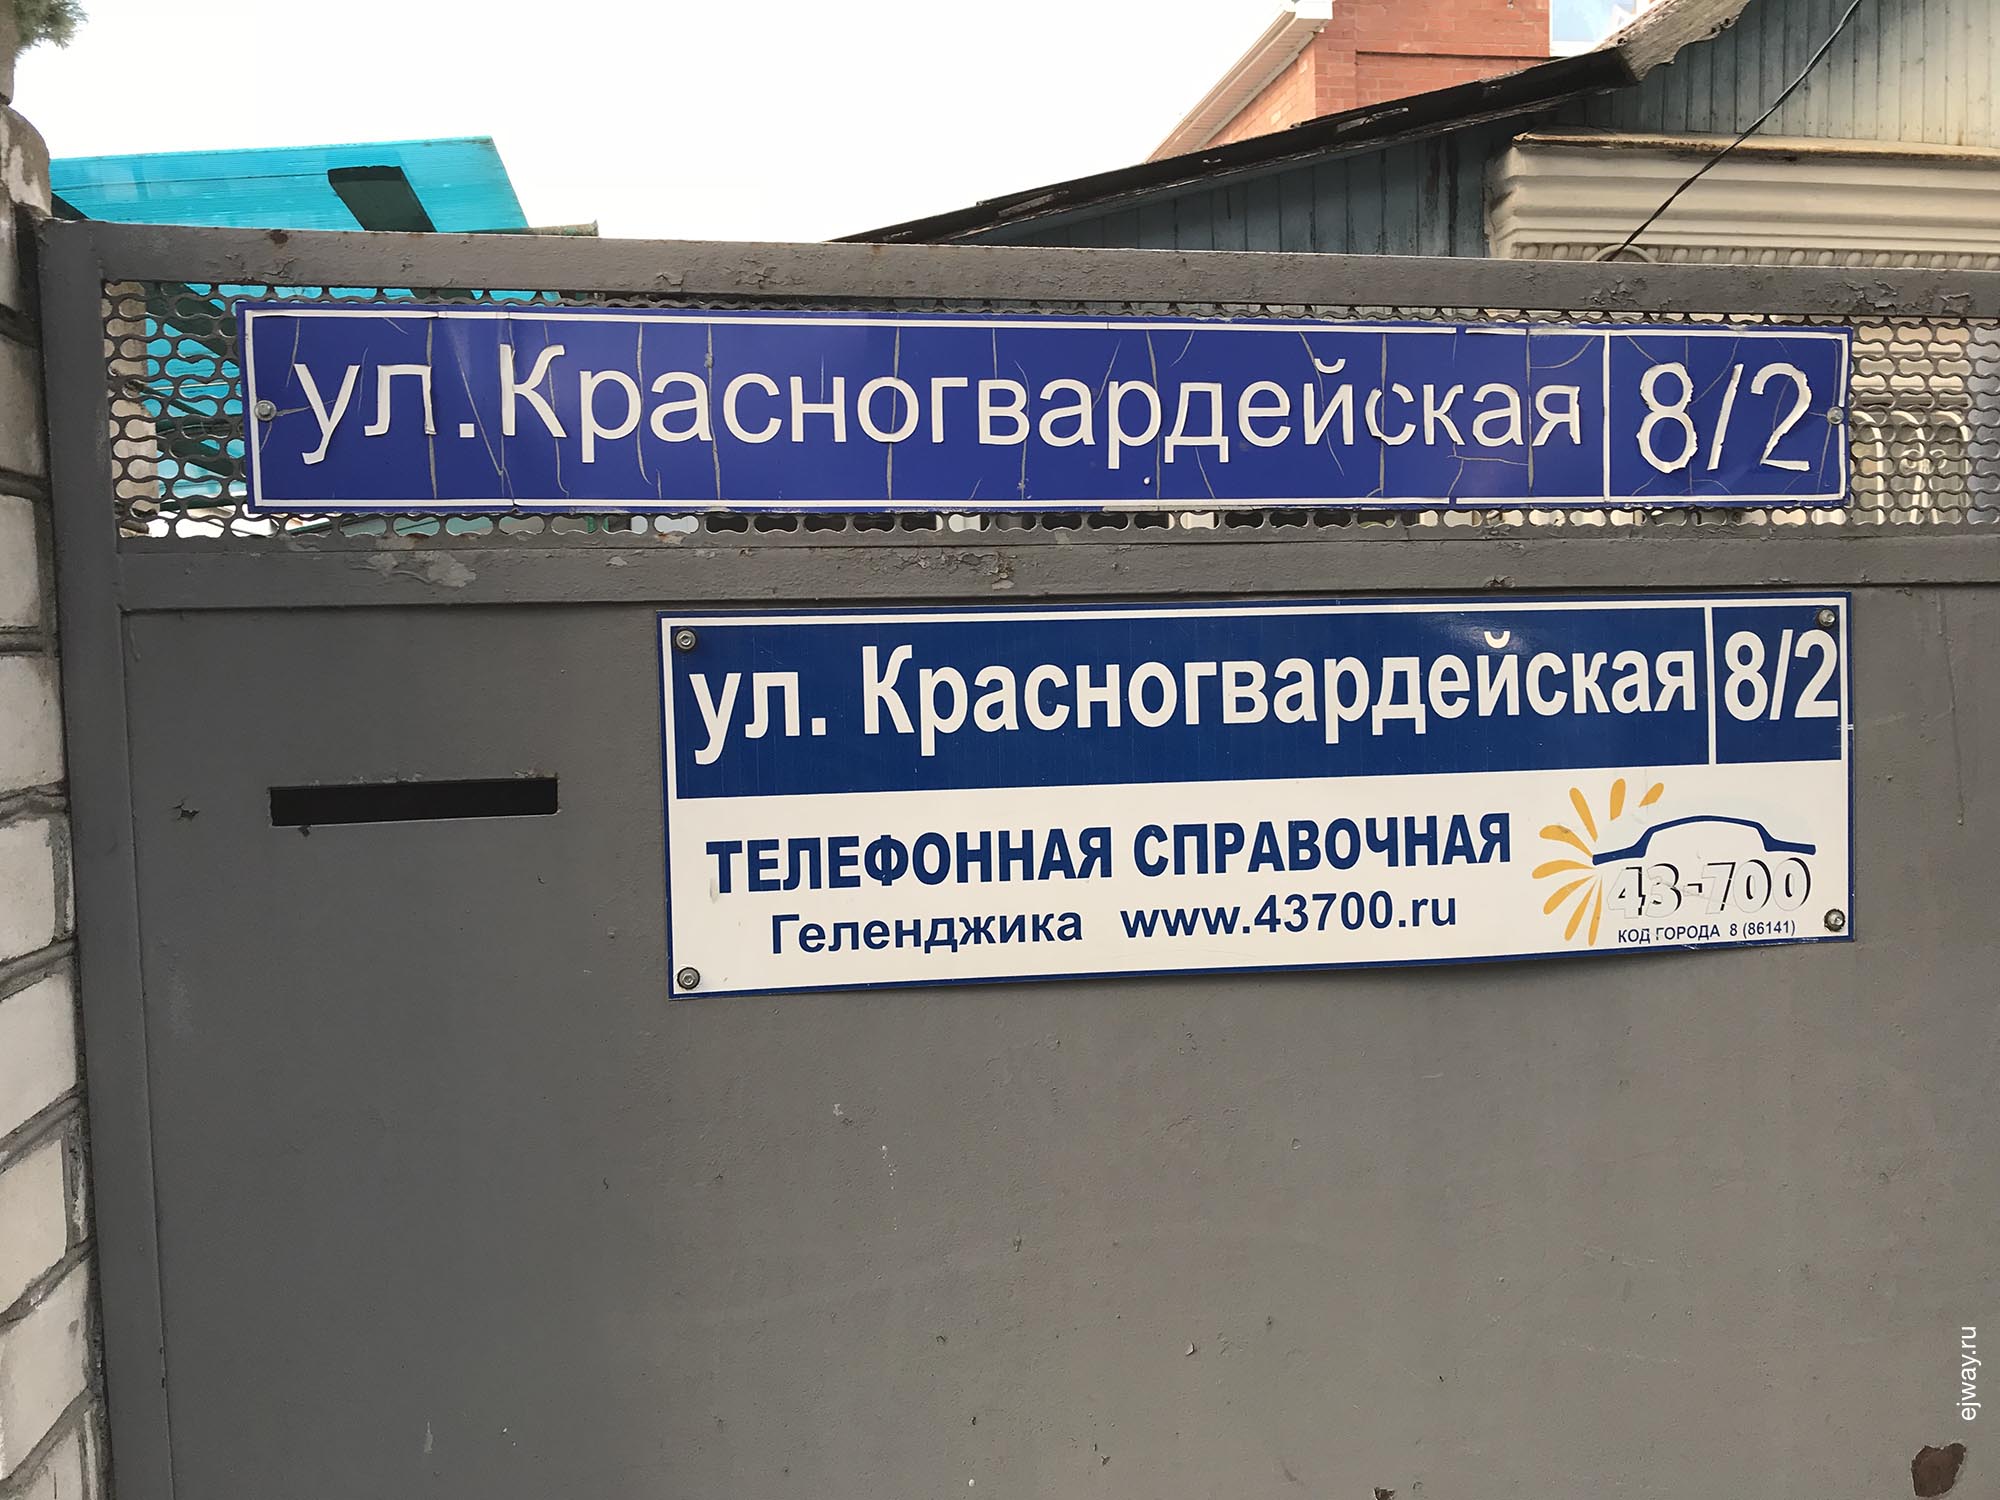 Геленджик, уличные таблички, ejway.ru, треш, табличка